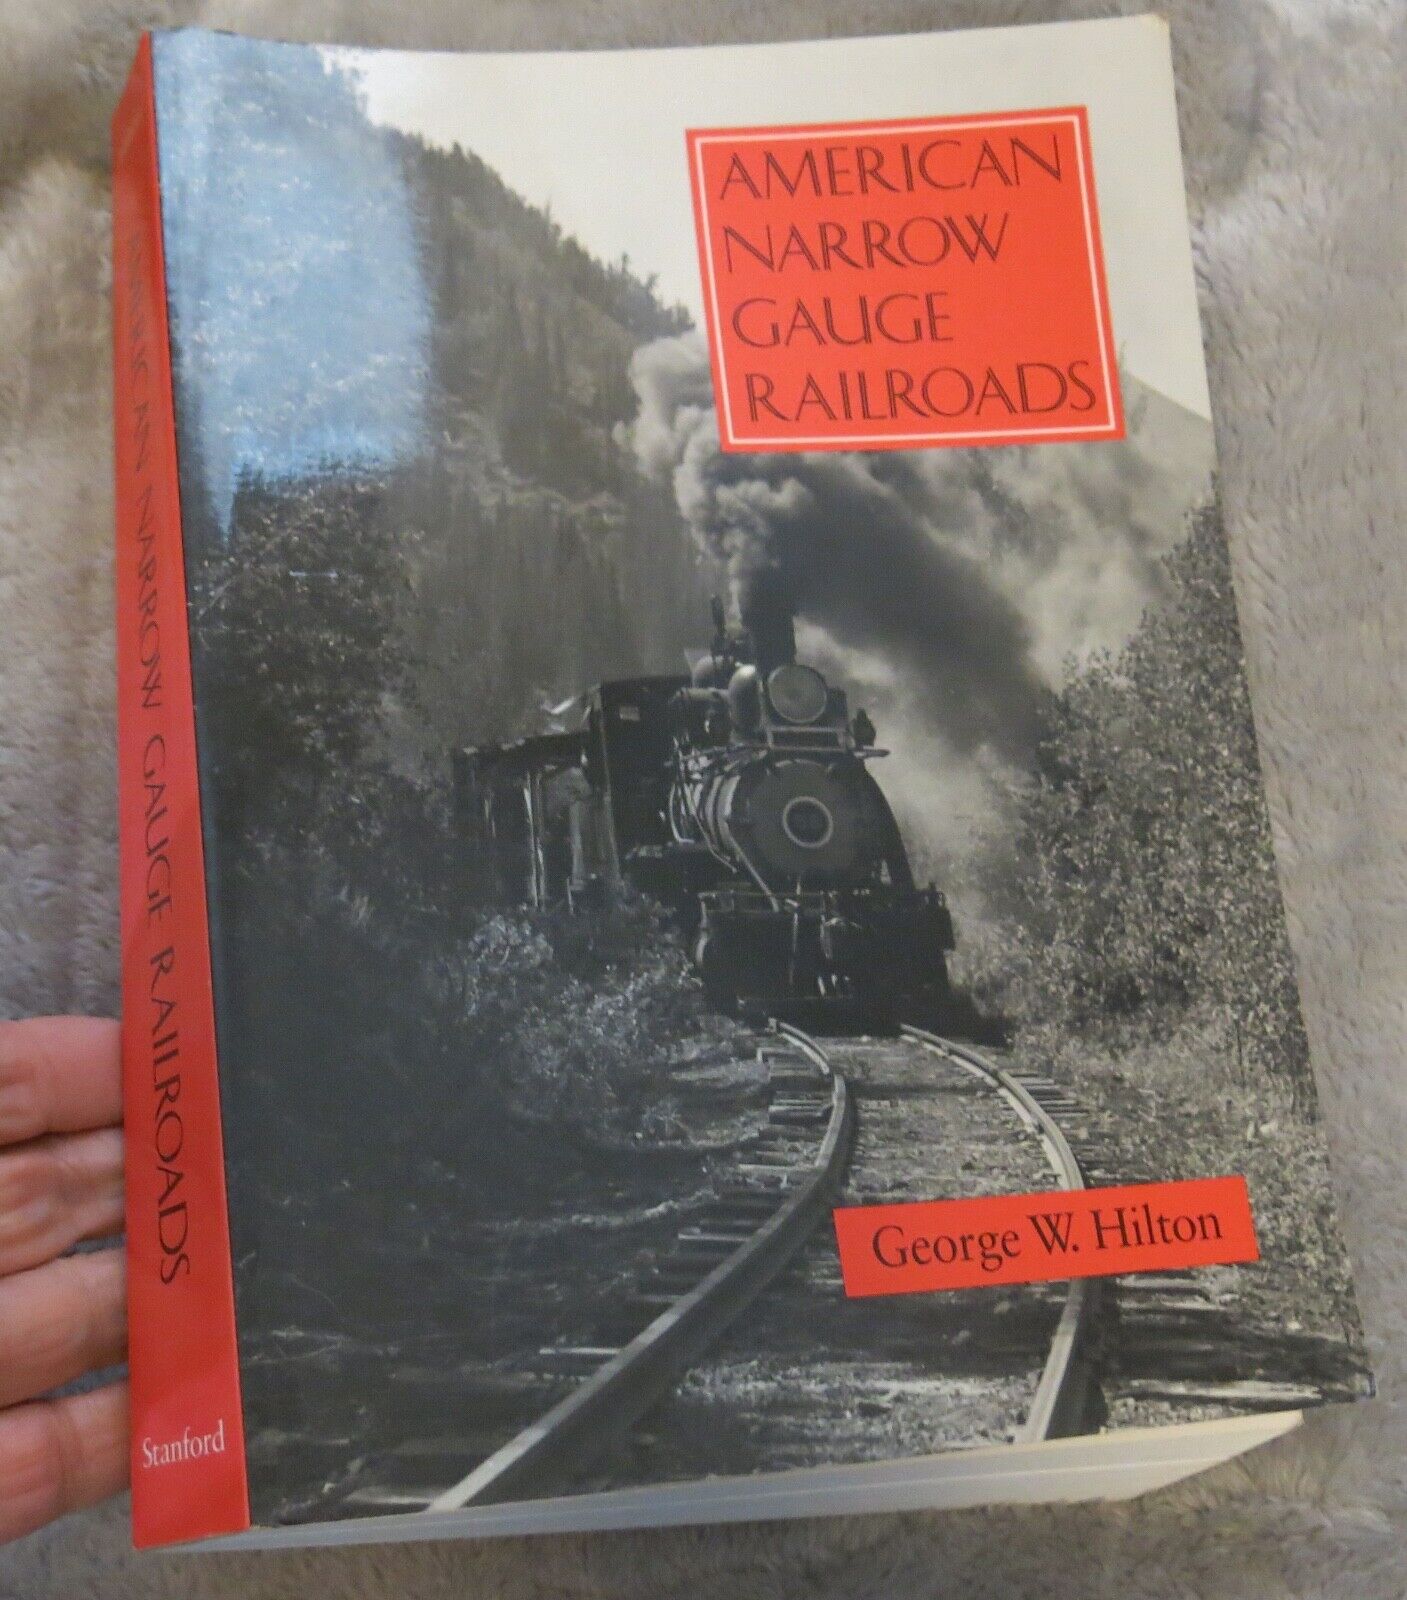 American Narrow Gauge Railroads by George Hilton